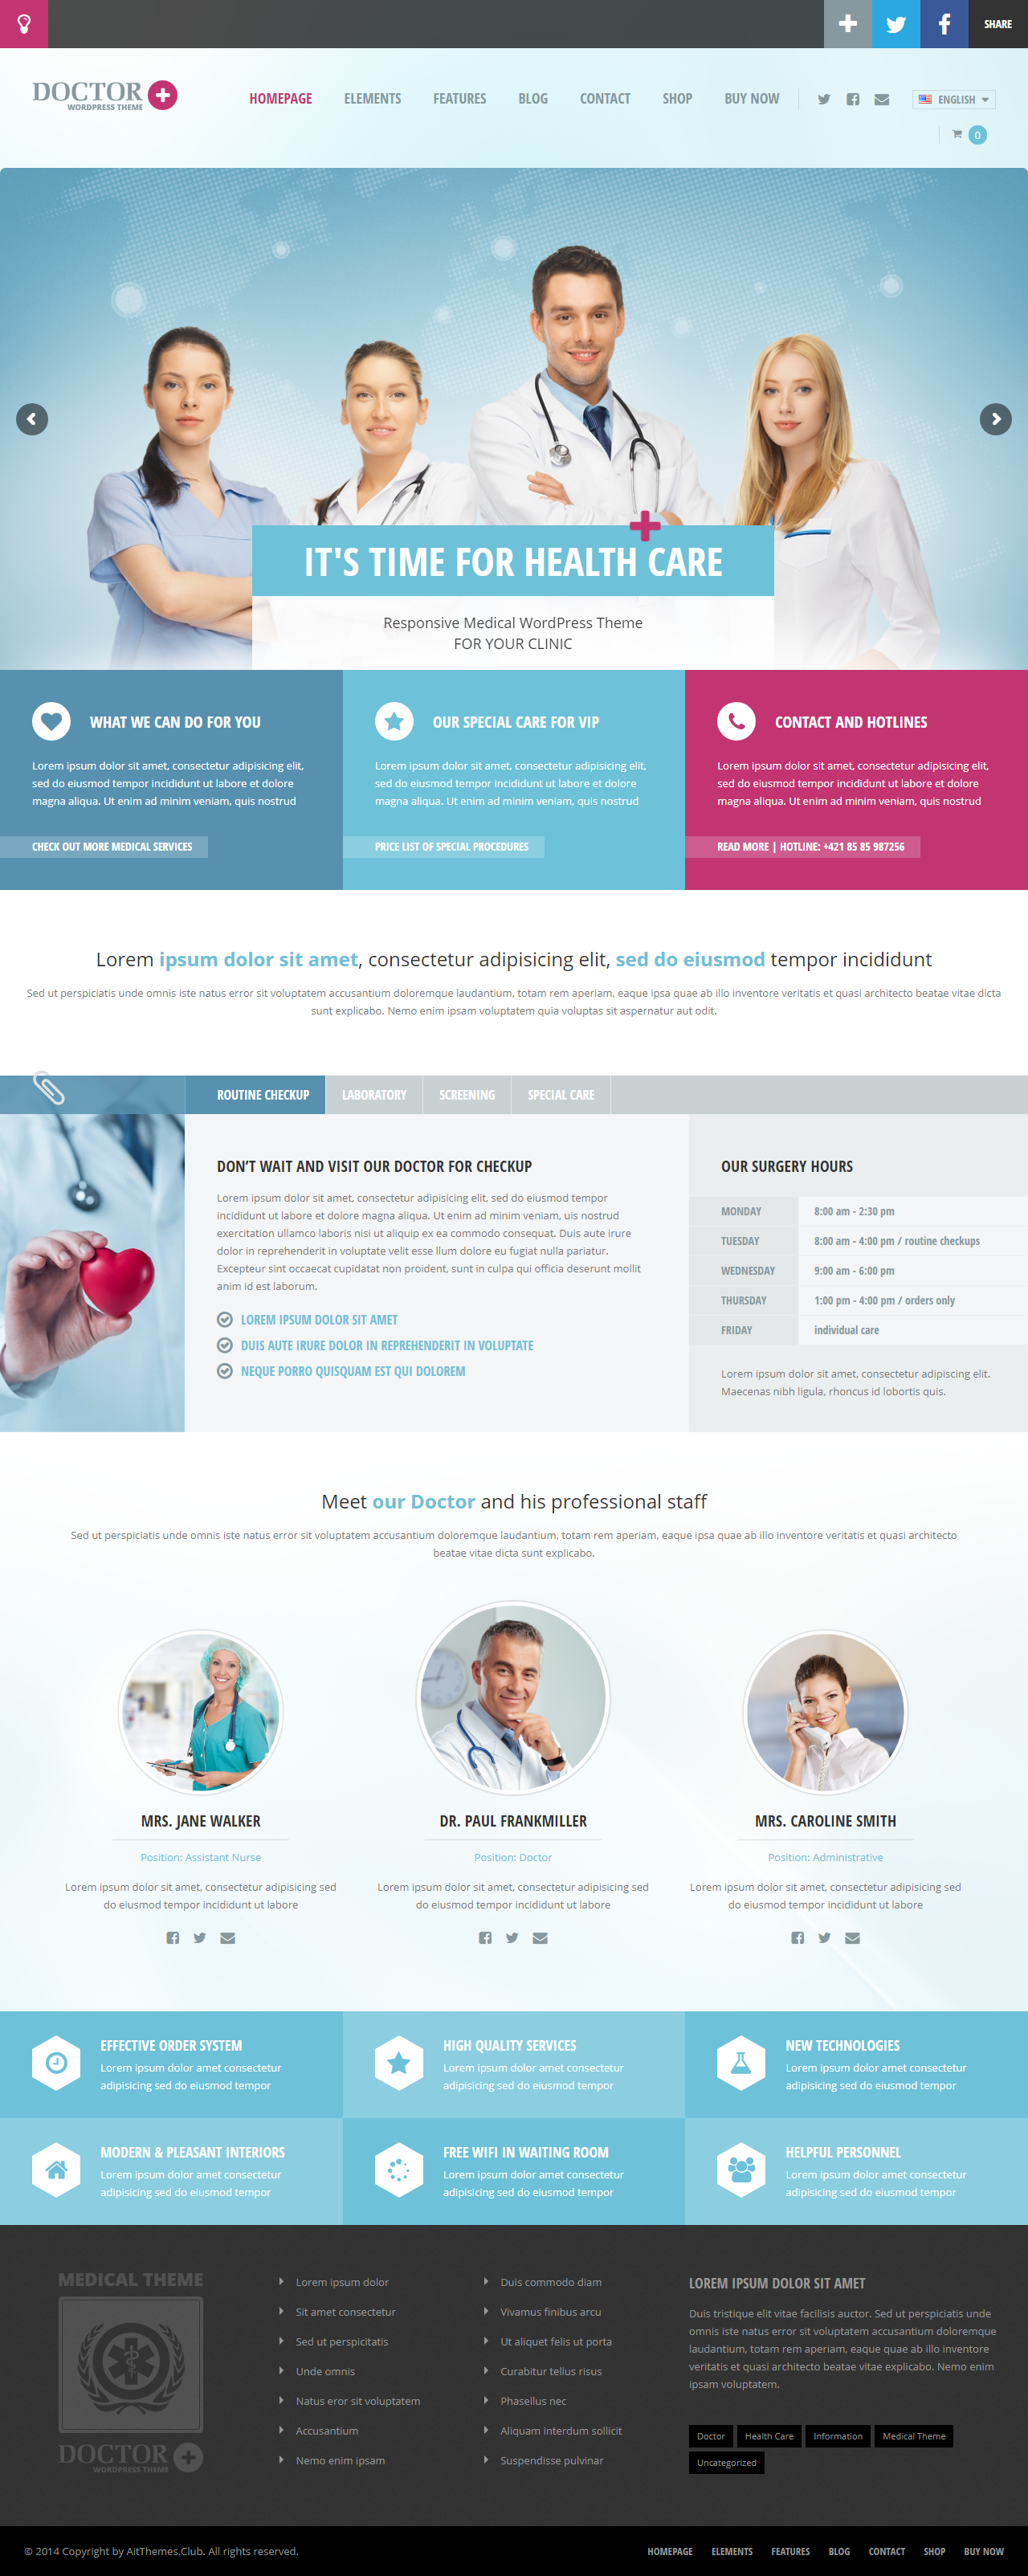 web design services in pune - Medical WordPress Theme - Web Design Services in Pune